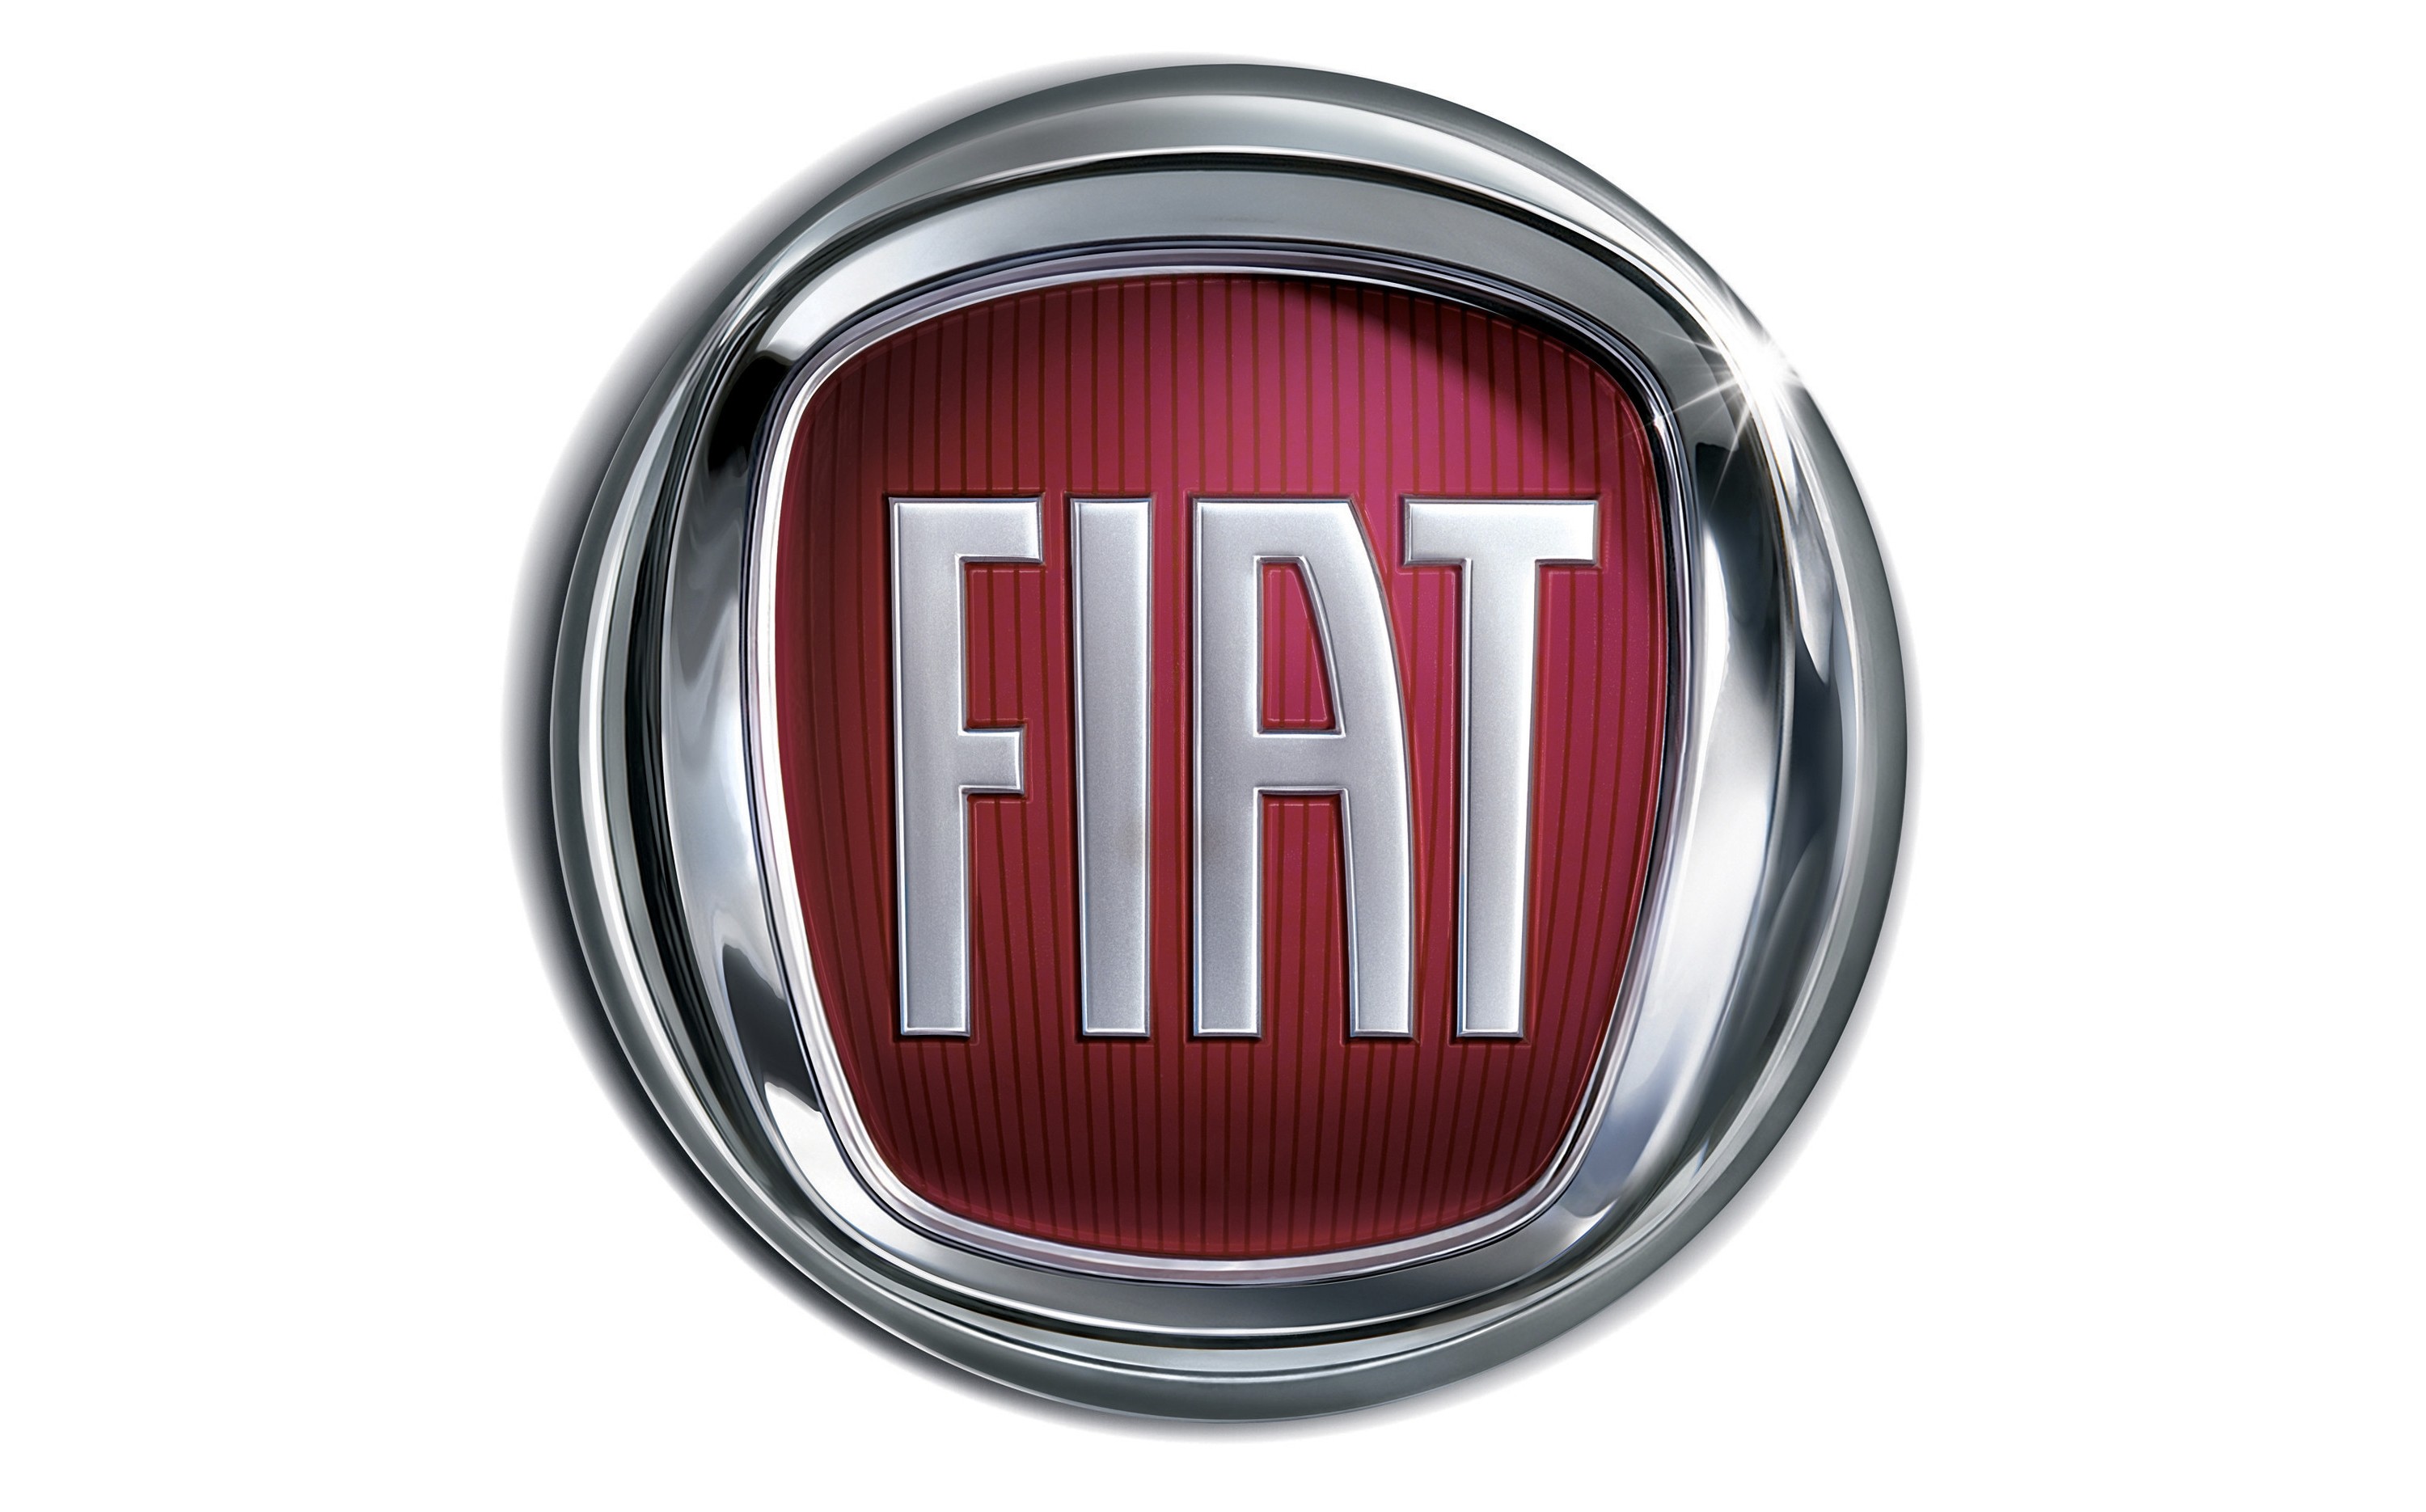 Fiat India Automobiles Pvt. Ltd.